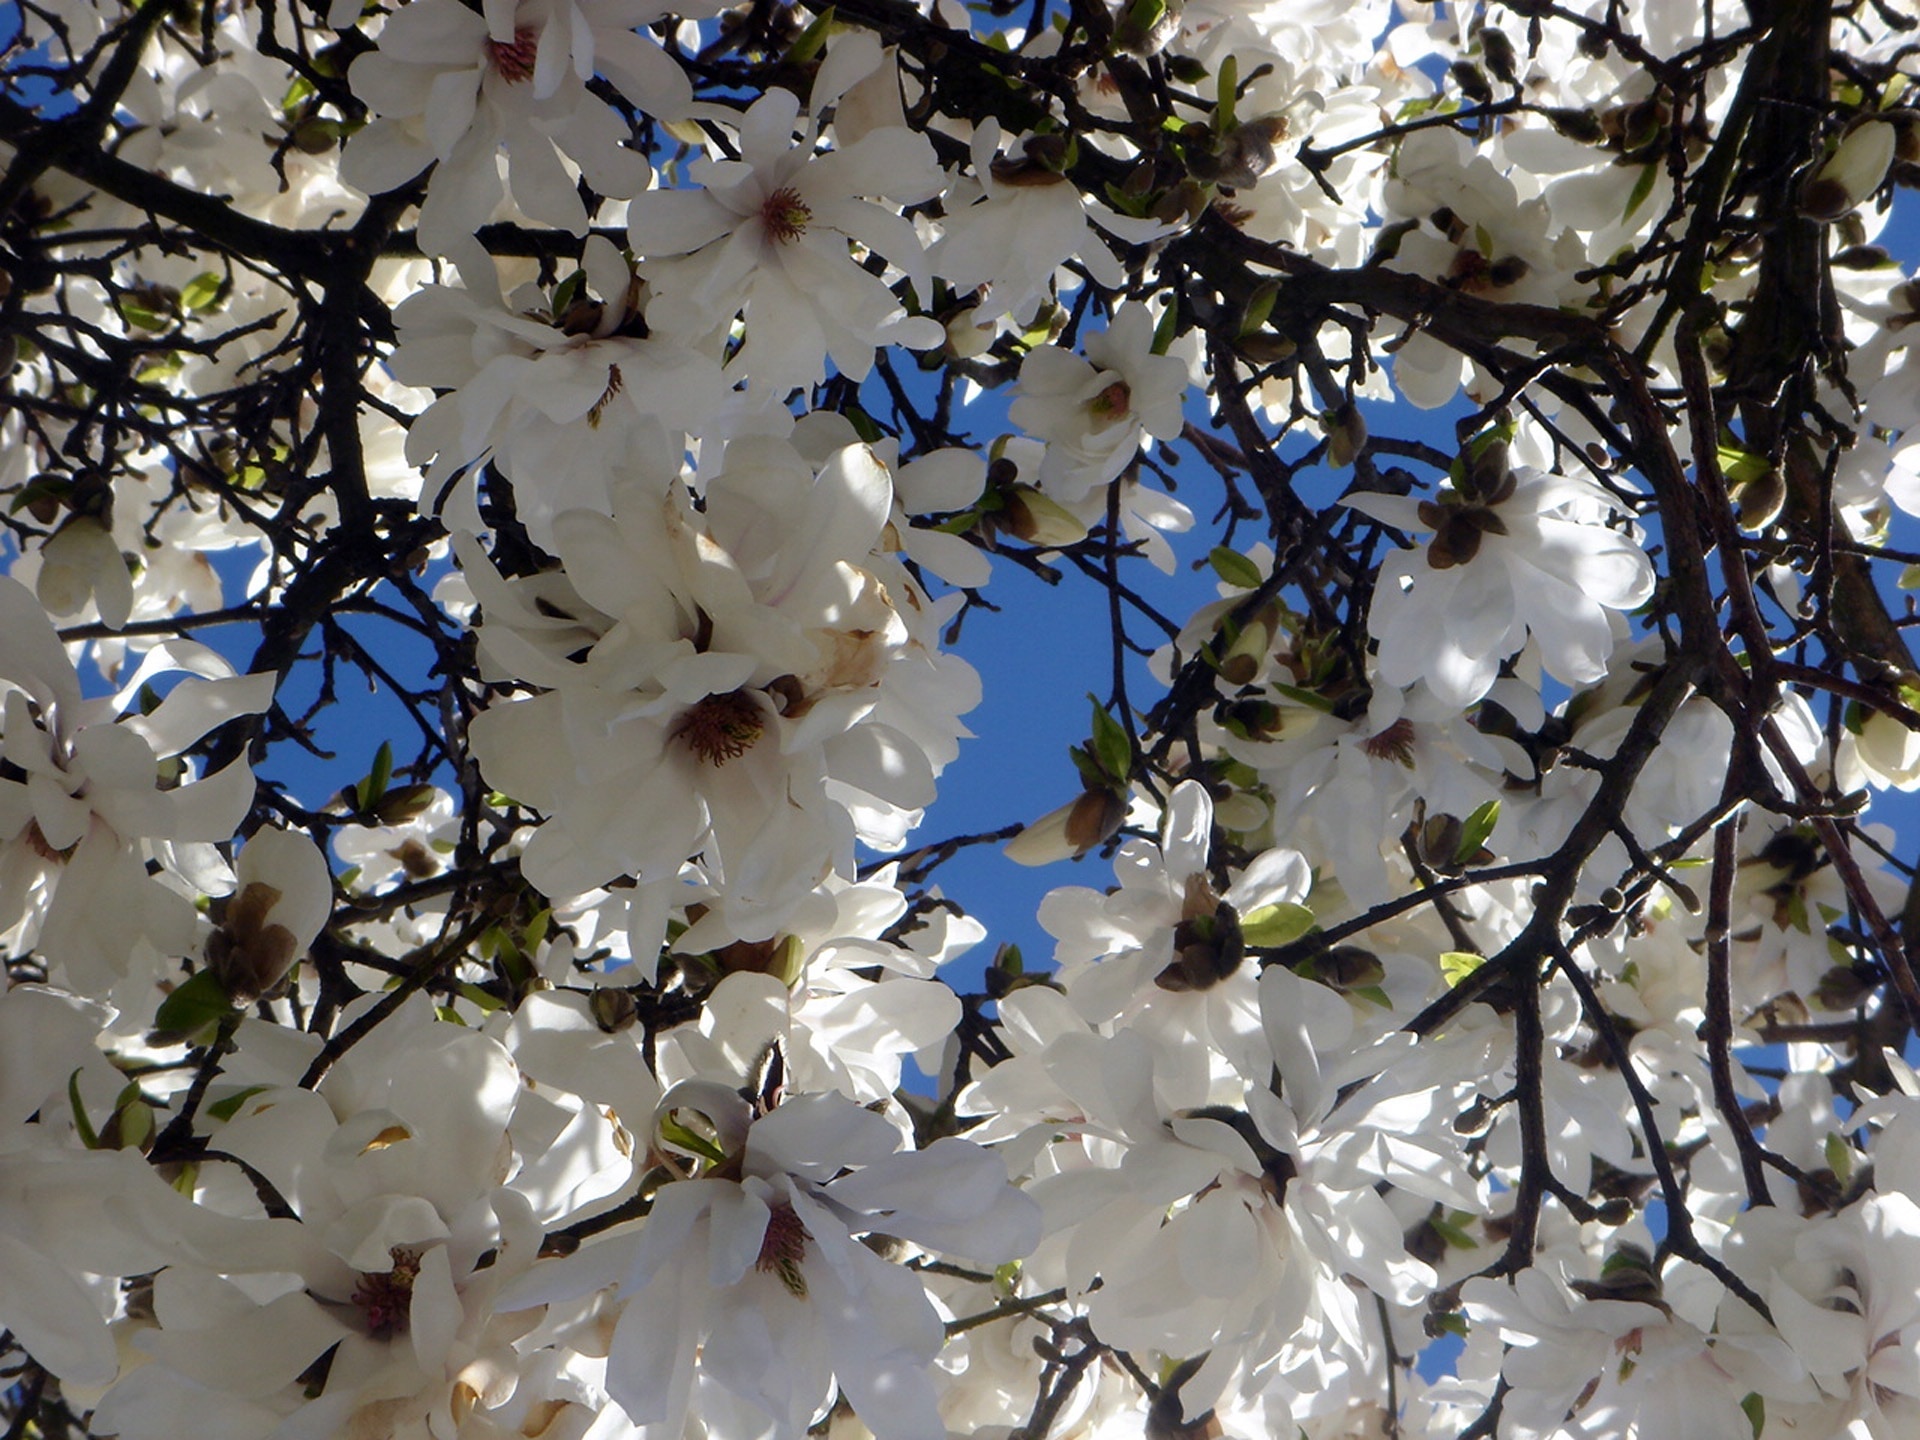 white flowers on tree